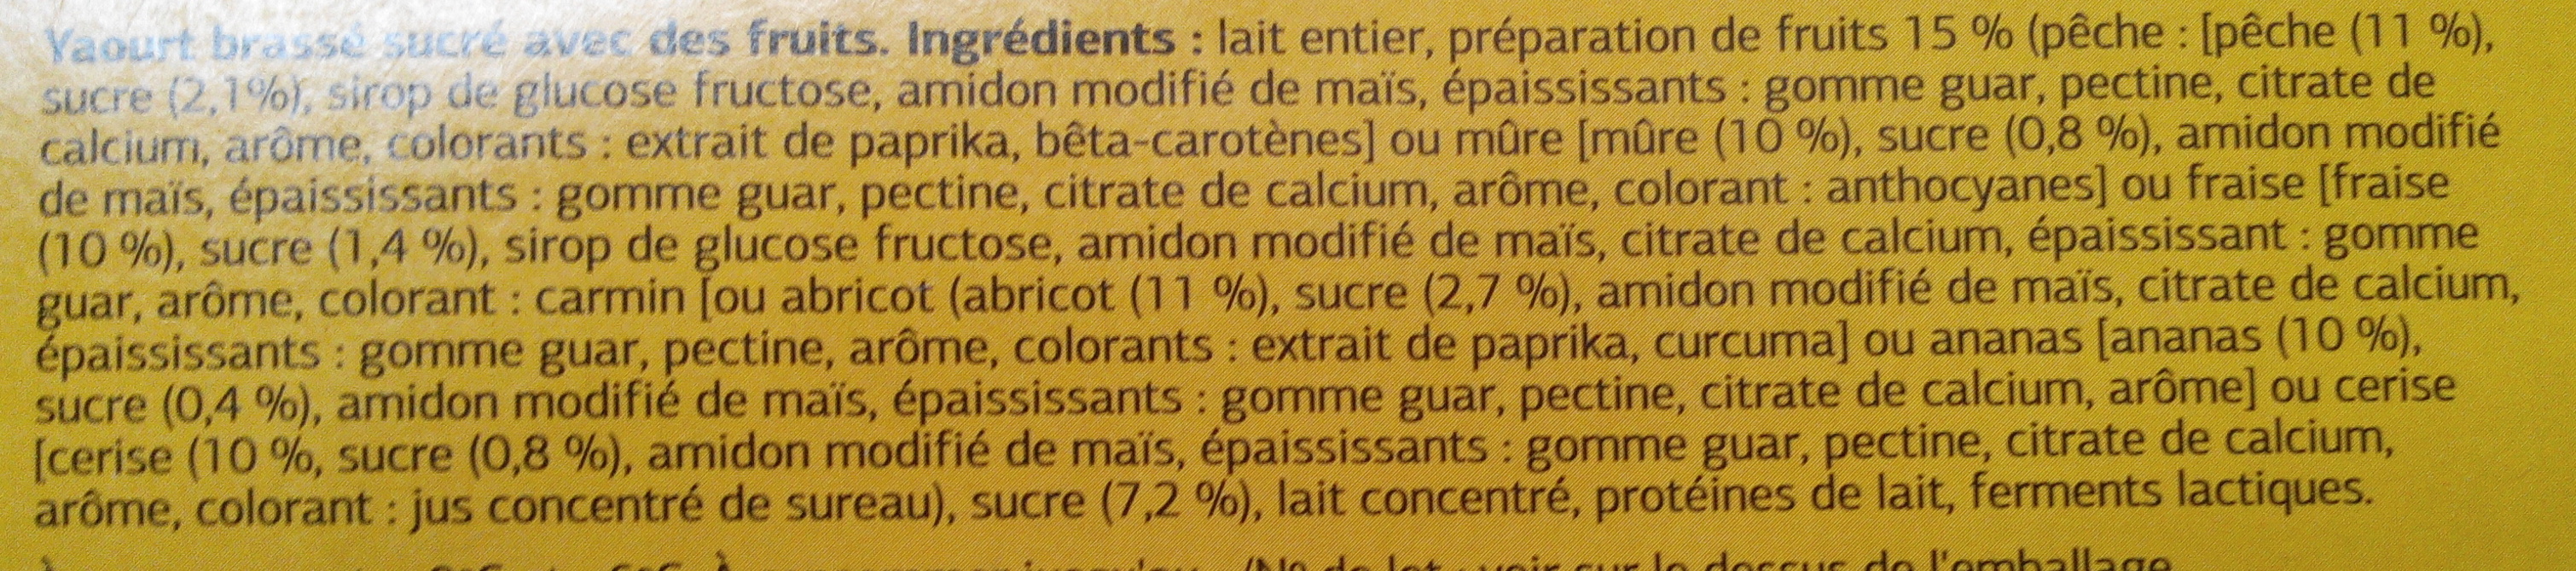 Yaourts aux Fruits (12 pots) - Ingredients - fr